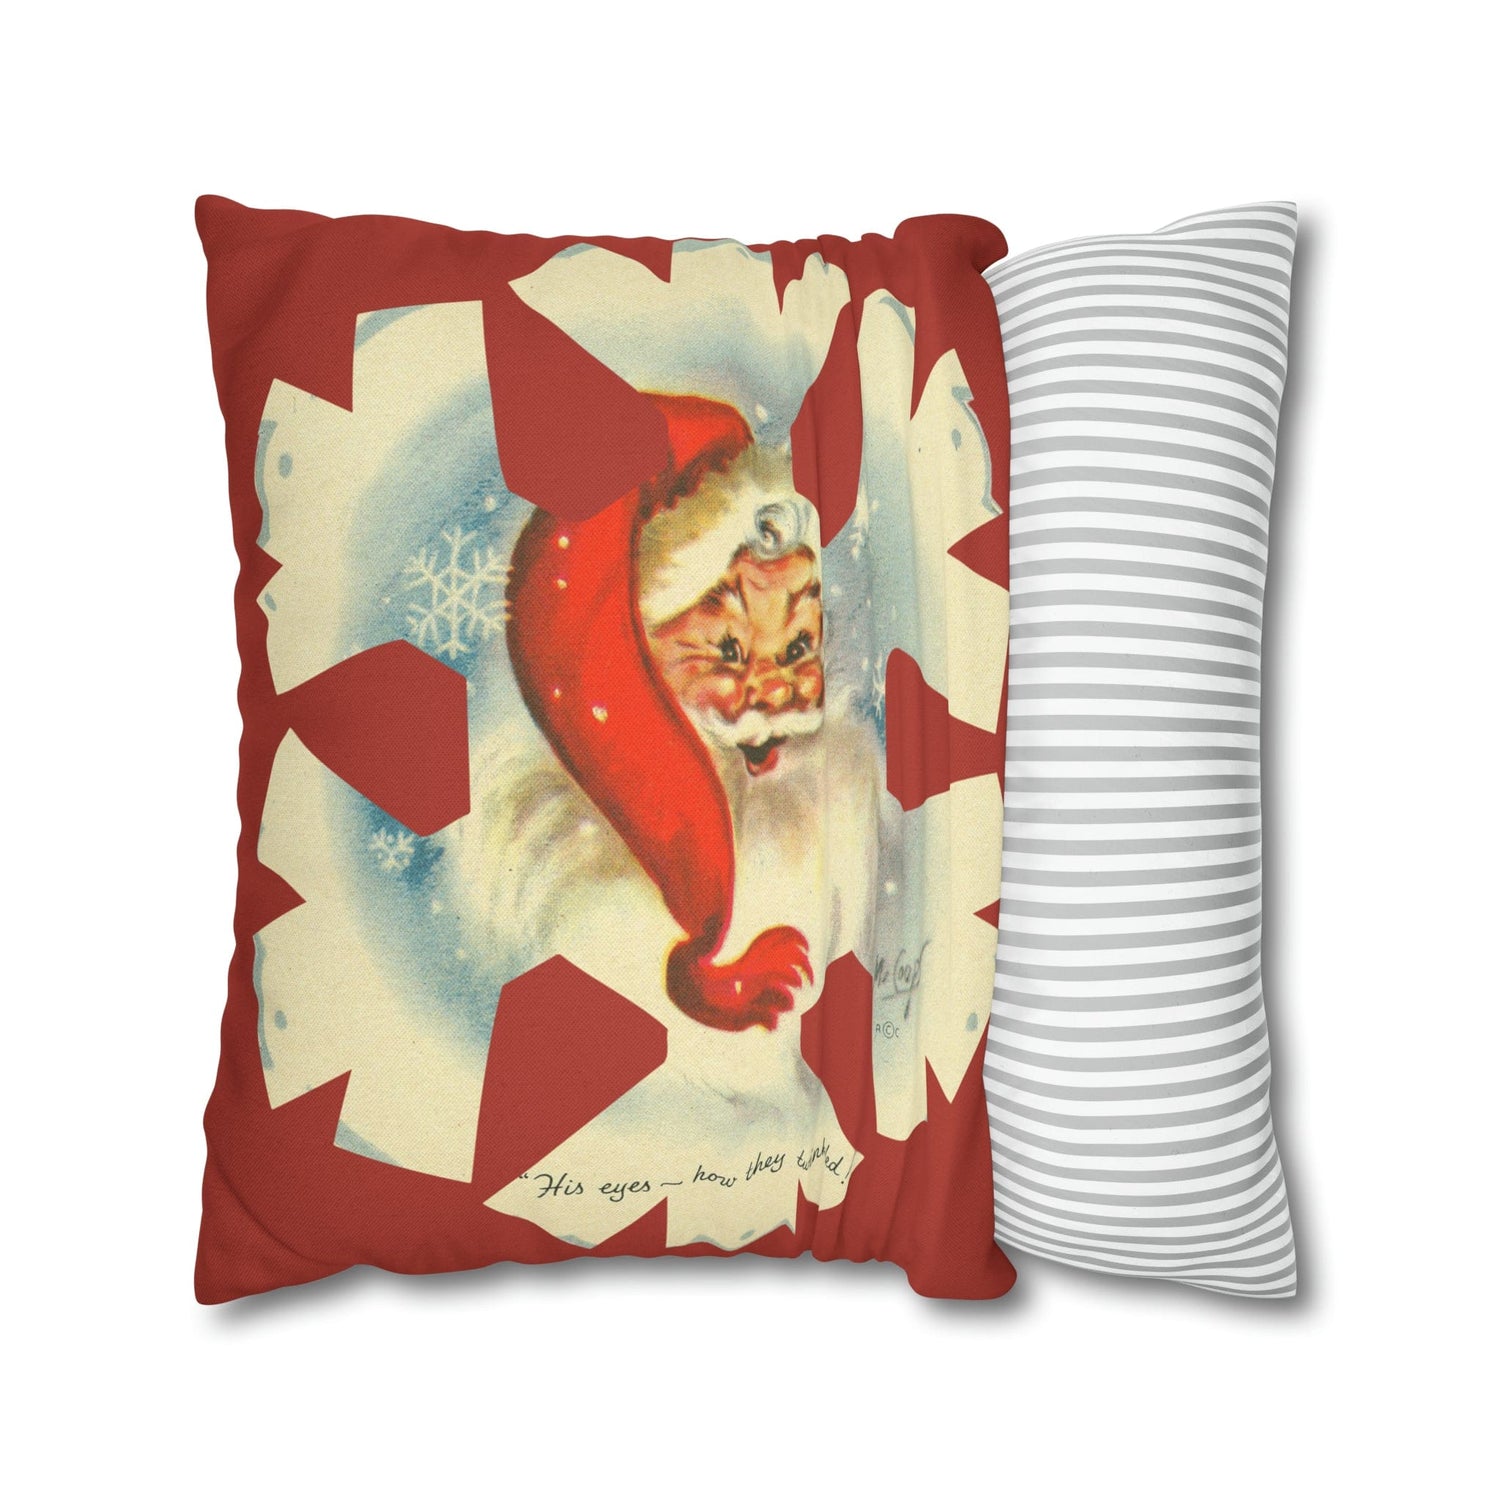 Vintage Smiling Santa, Red Christmas Snowflake Pillow Cover Home Decor